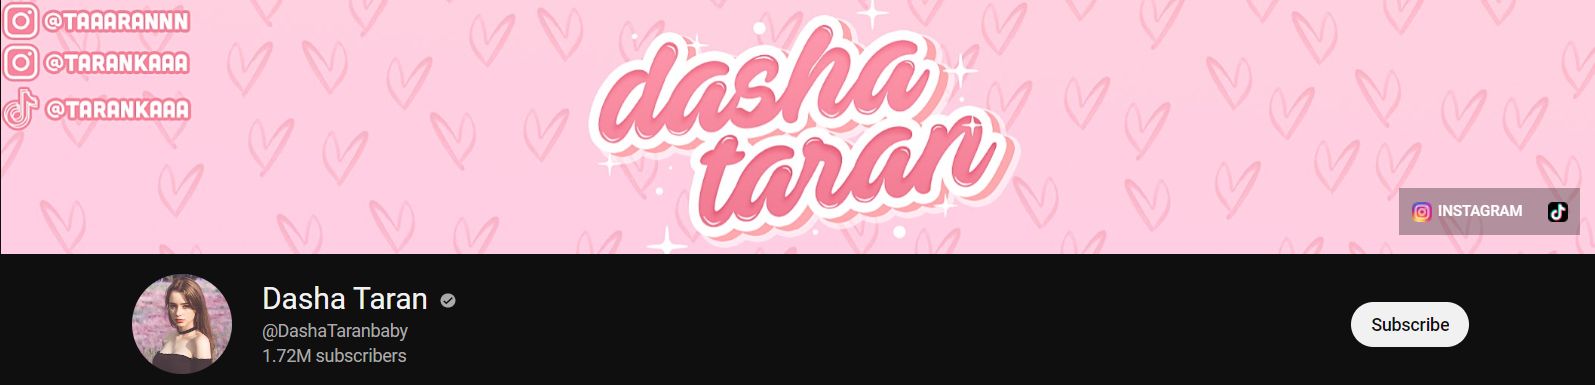 Dasha's YouTube channel